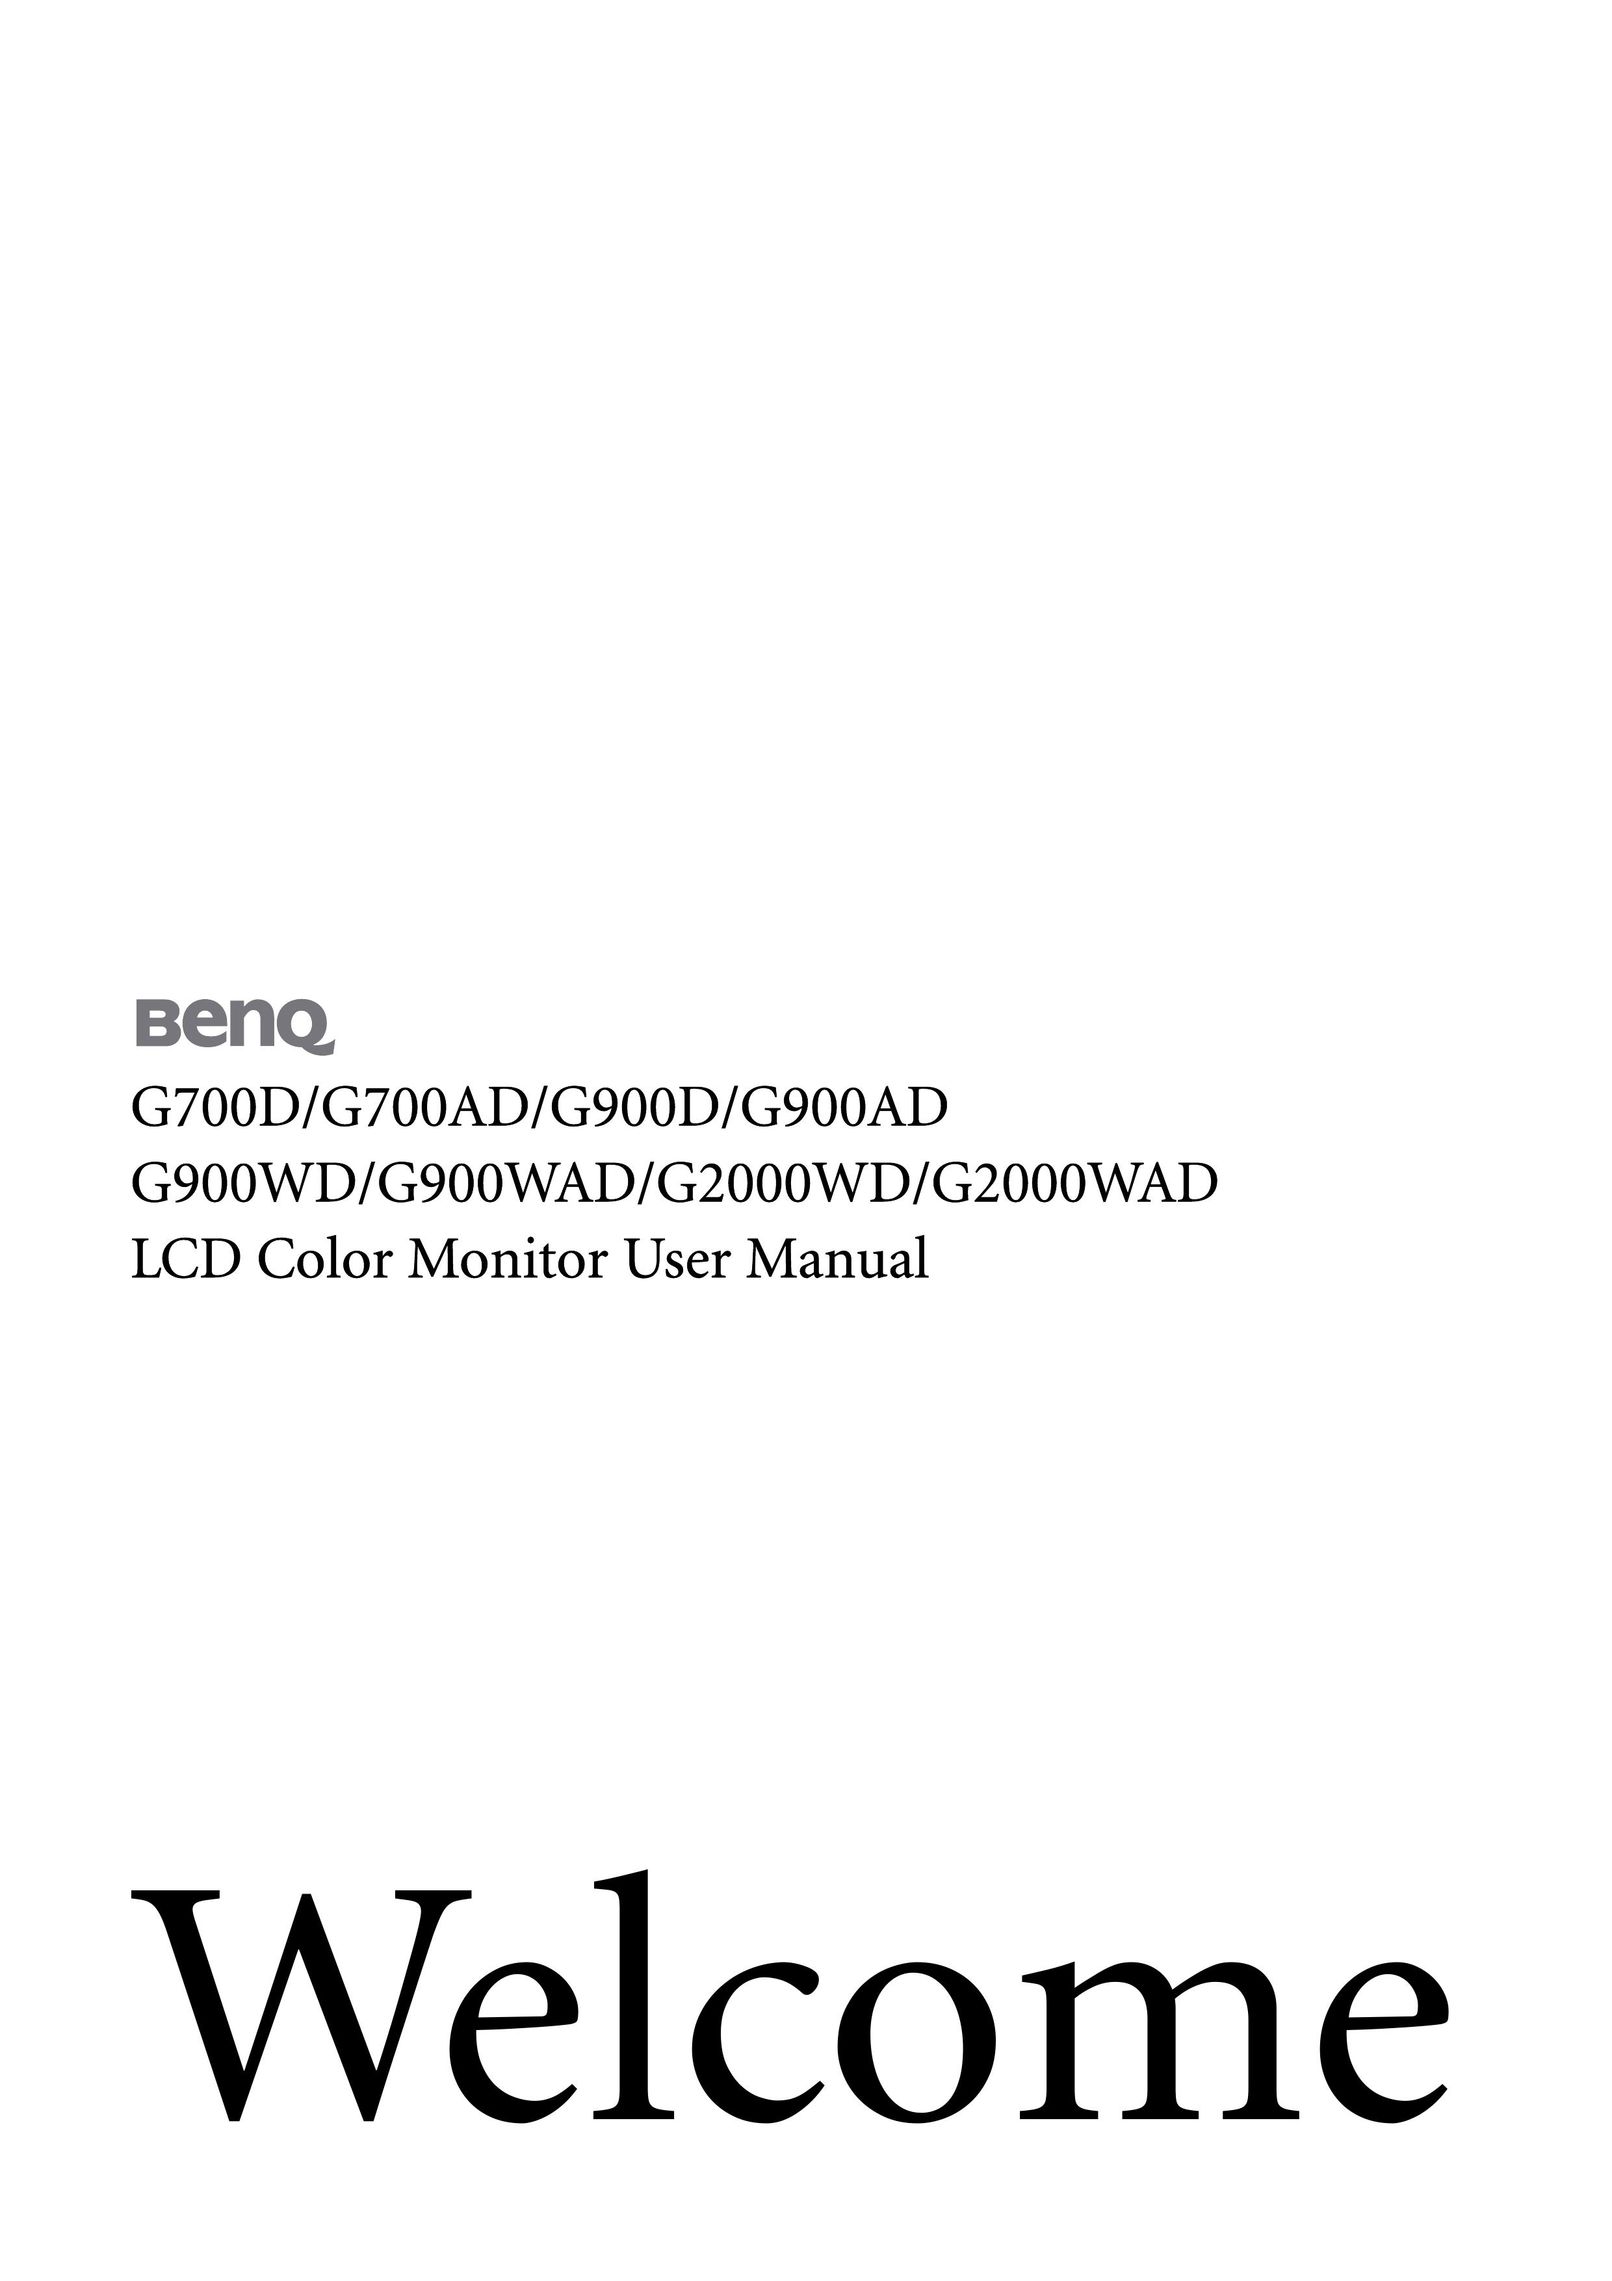 BenQ G2000WD Computer Monitor User Manual